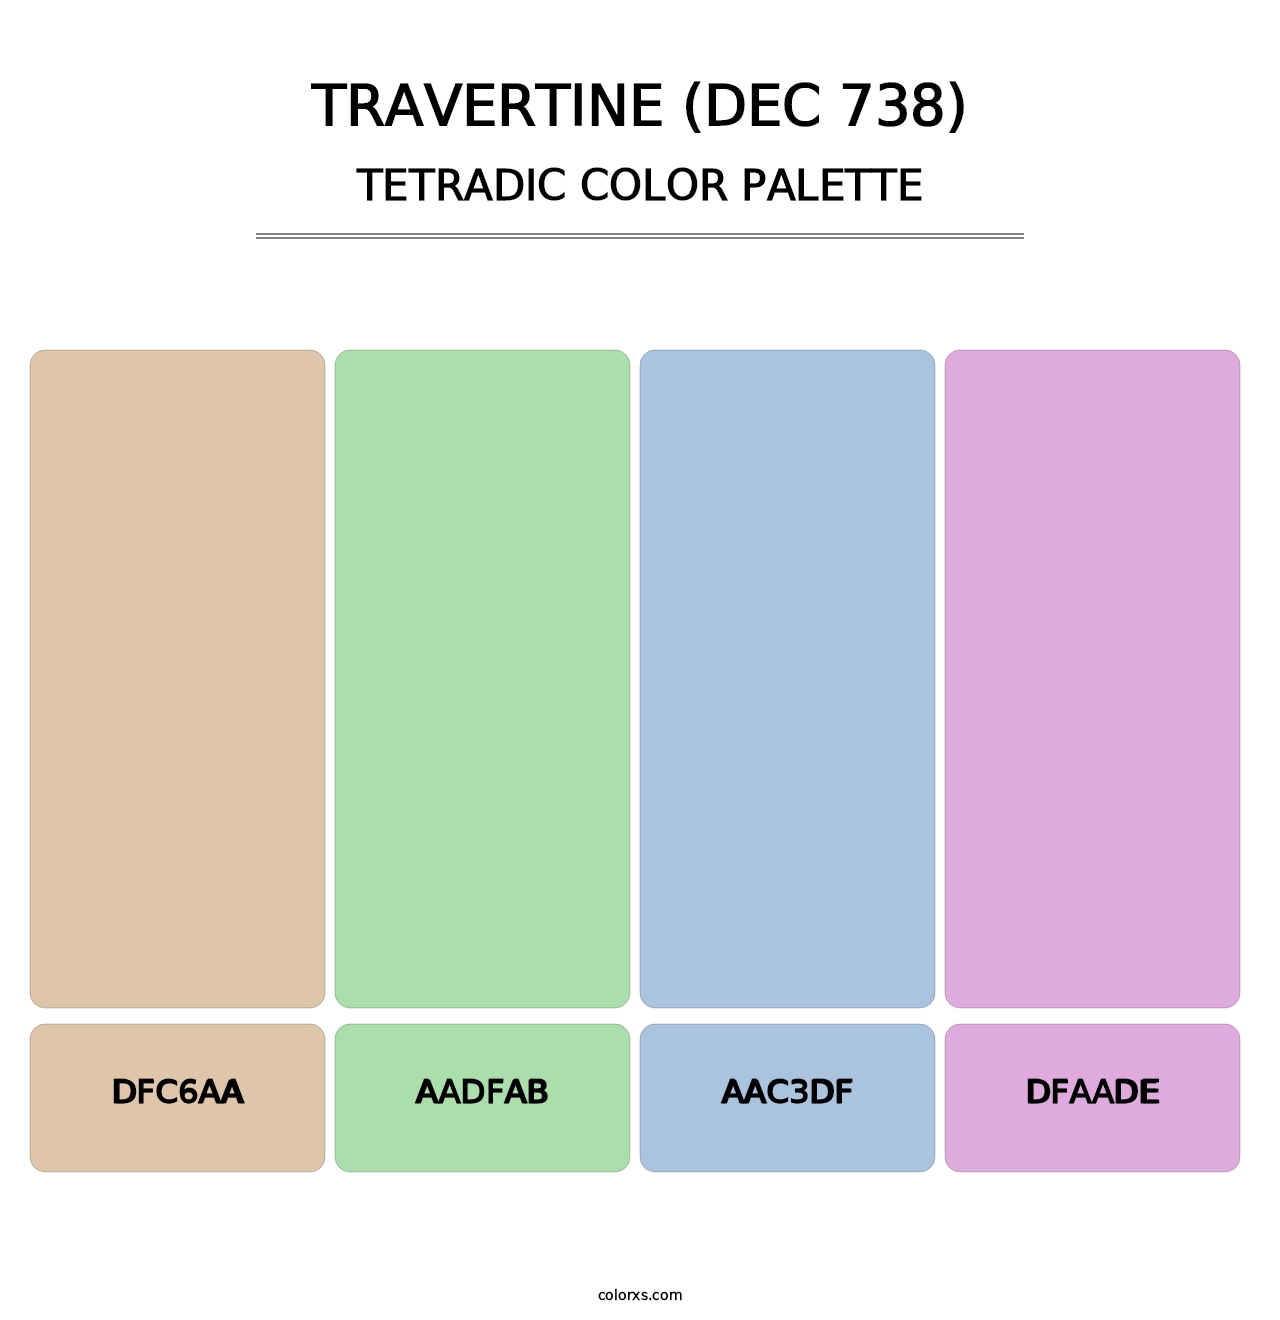 Travertine (DEC 738) - Tetradic Color Palette